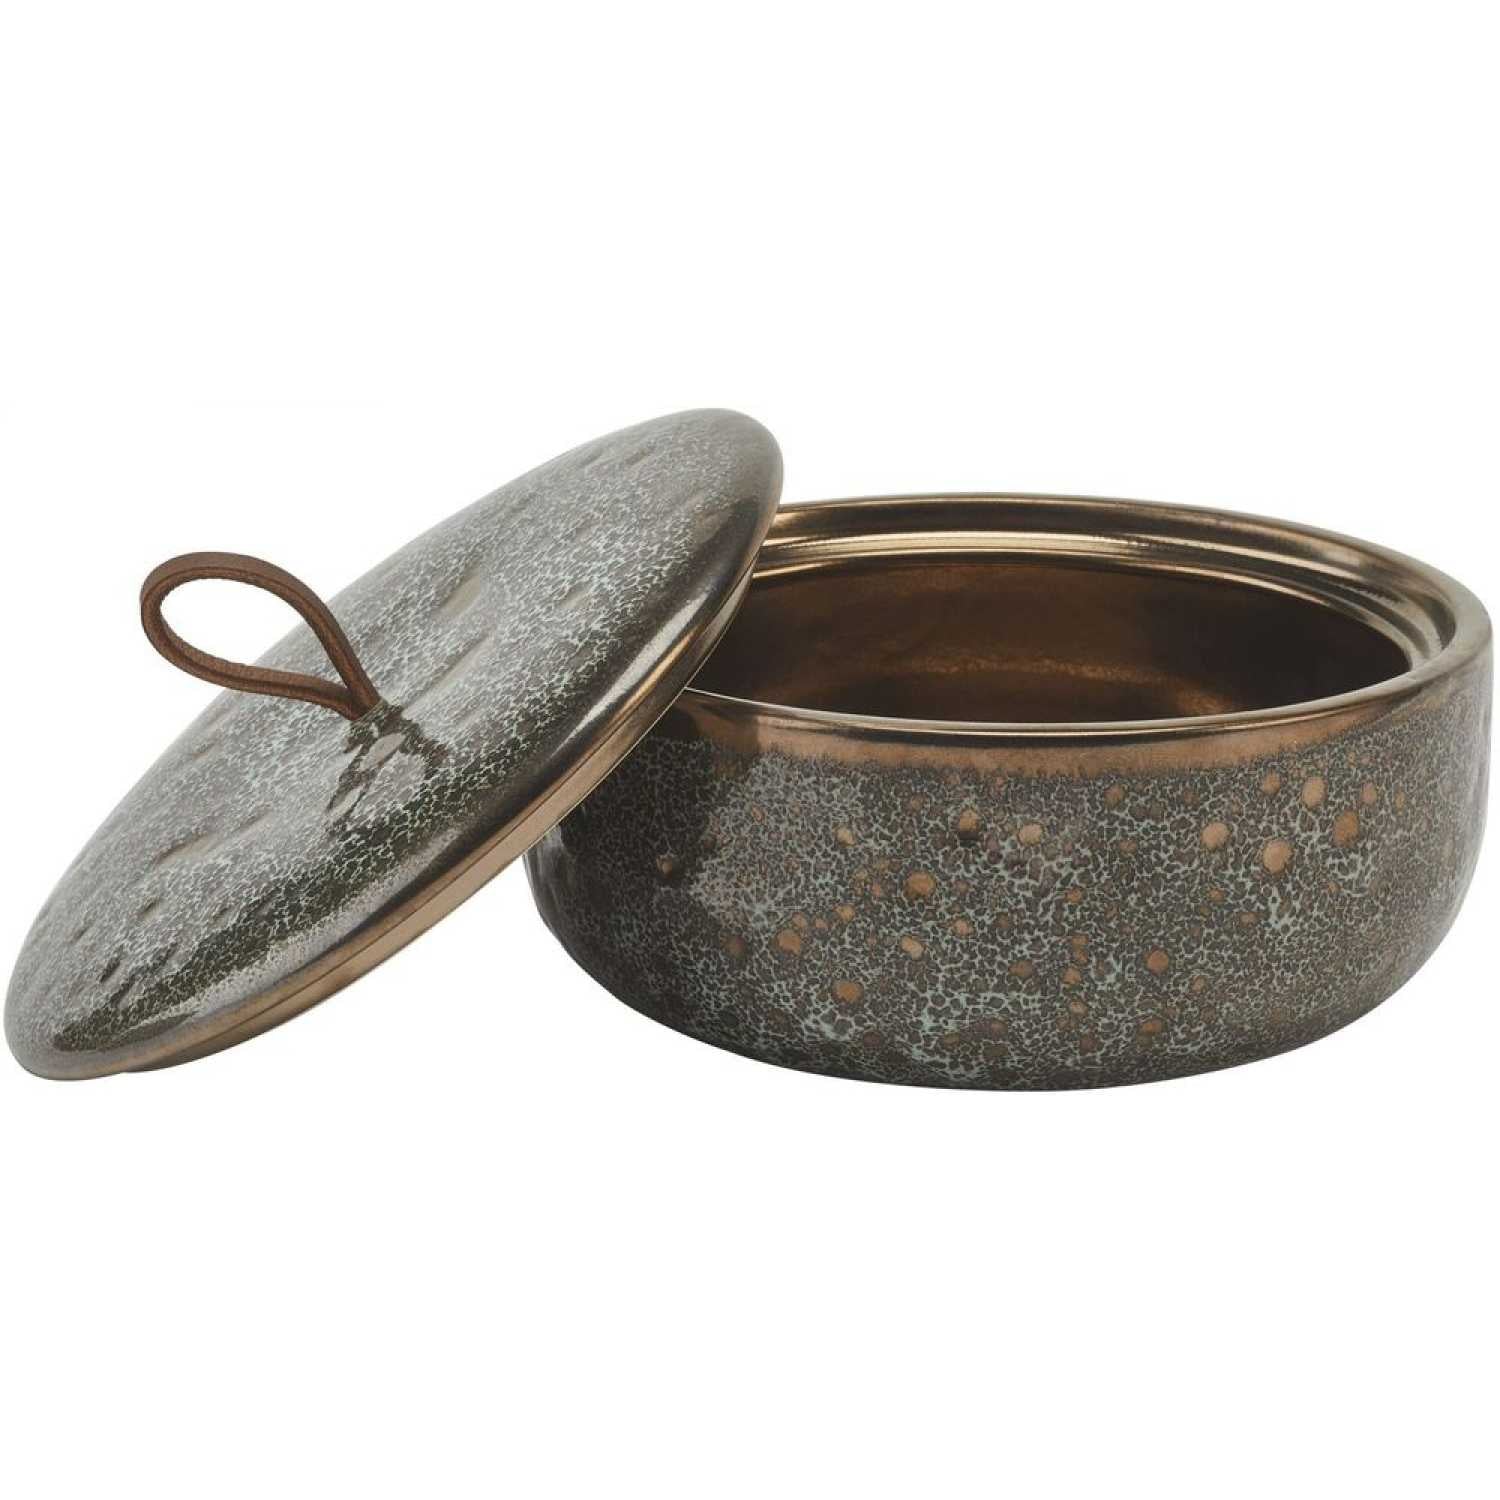 Vintage Bronze Bathroom Accessories - Bowl with Lid - |VESIMI Design| Luxury and Rustic bathrooms online